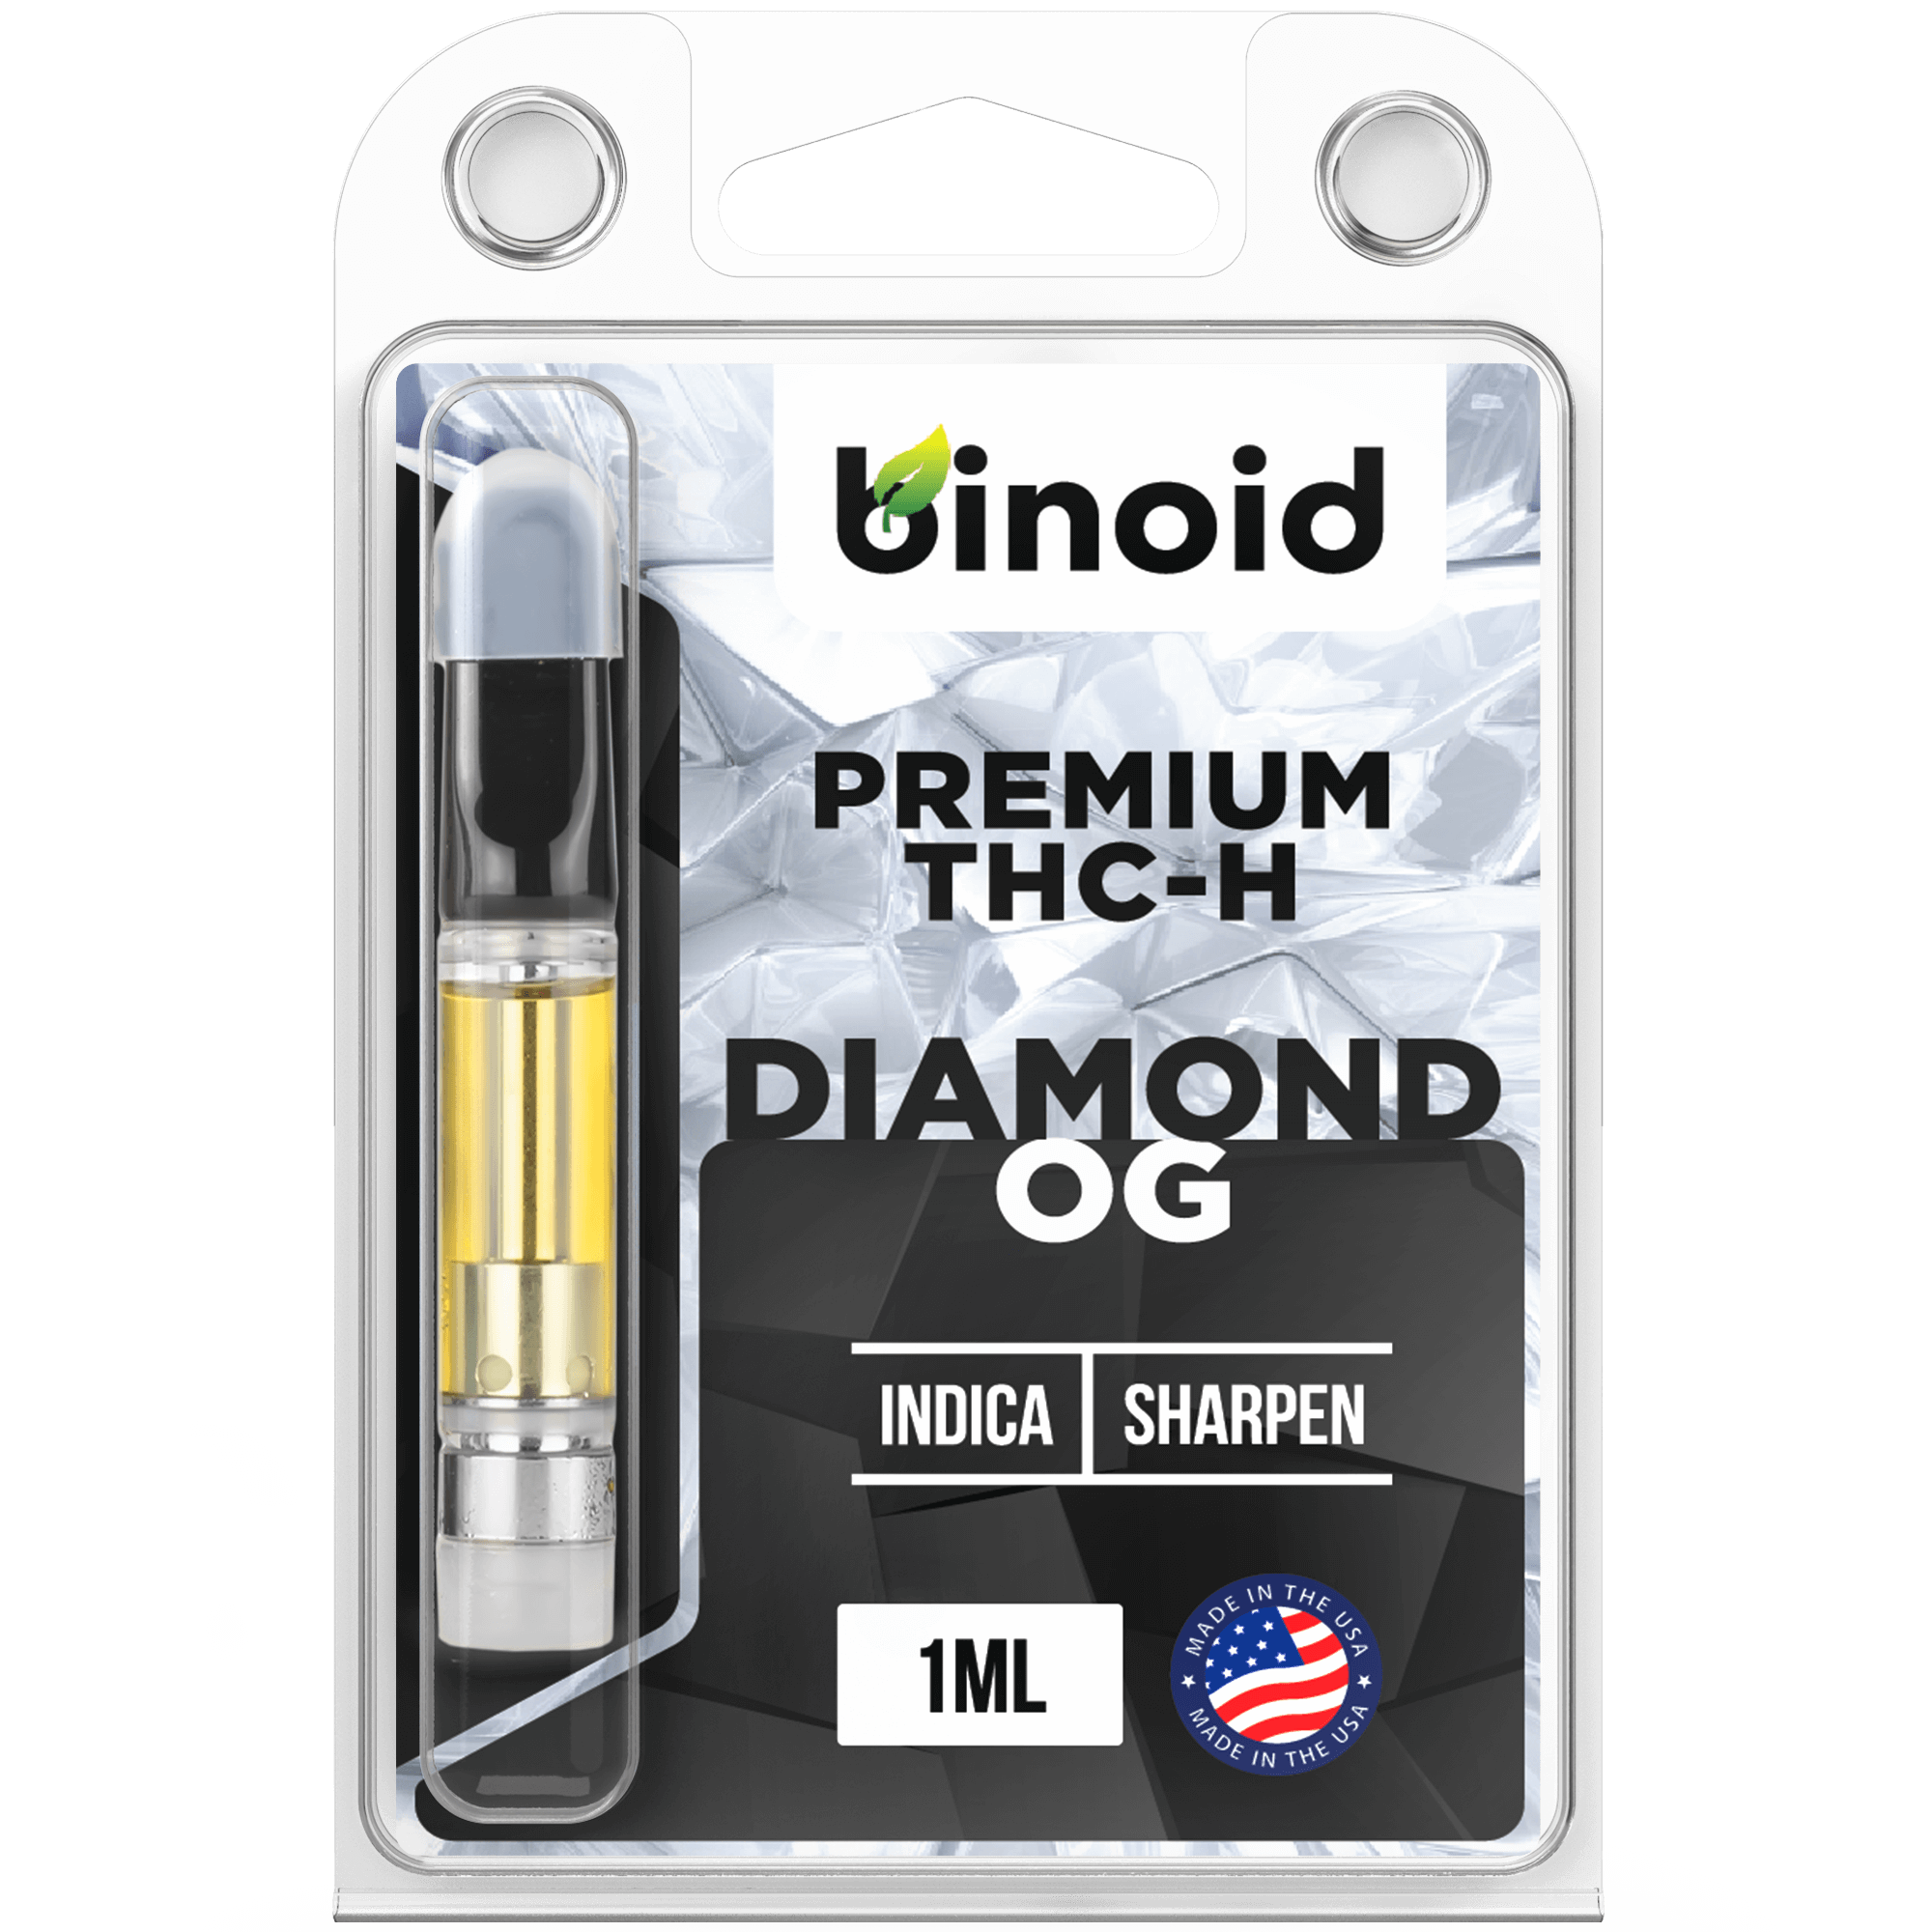 Binoid THC-H Vape Cartridge - Diamond OG Best Price